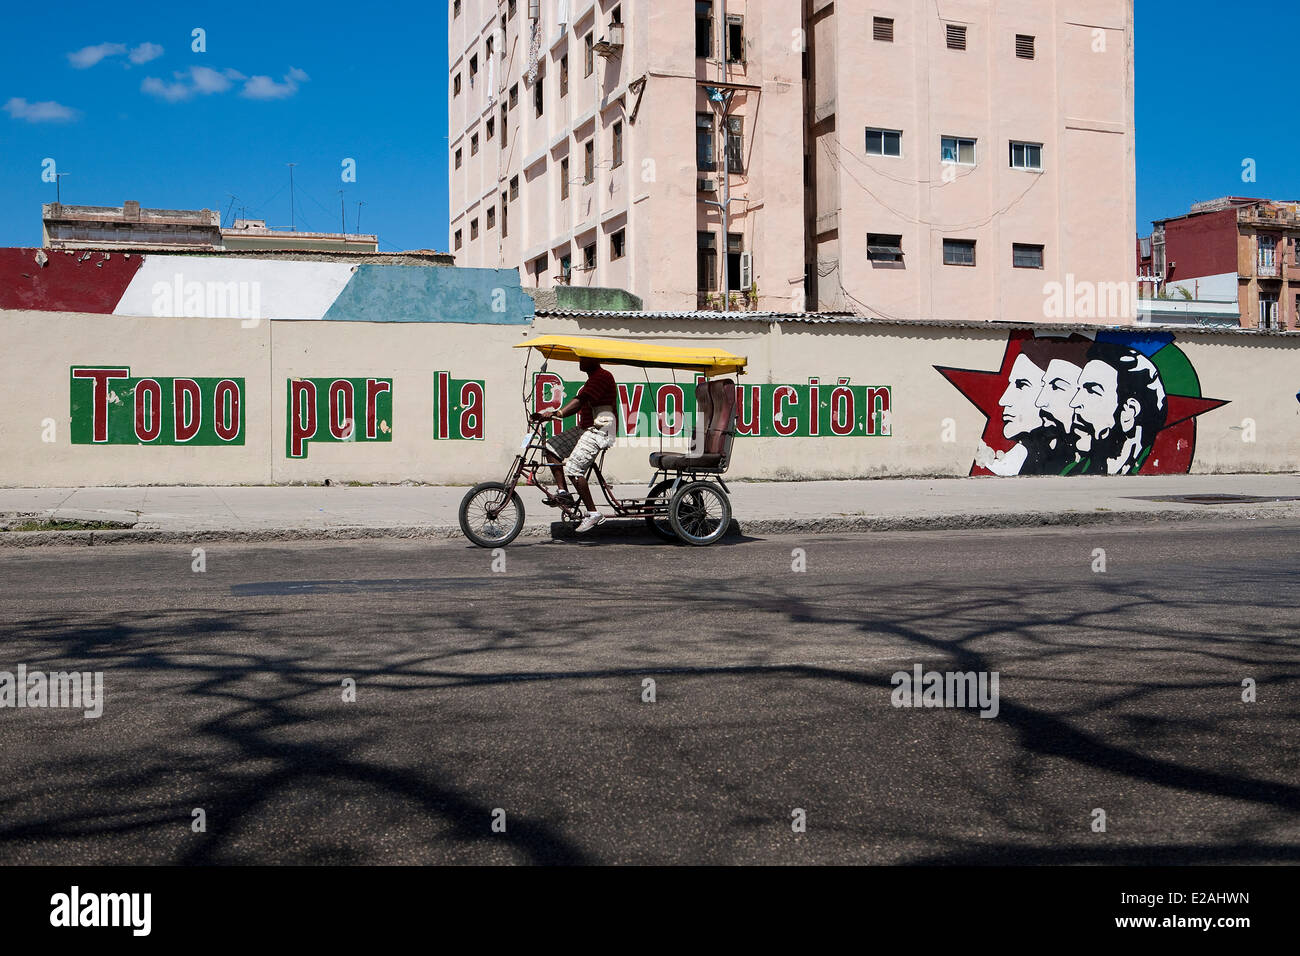 Kuba, Ciudad De La Habana Provinz, Havanna, Centro Habana Bezirk, Bicy Taxi und Wandbild zum Thema revolutionärer Propaganda Stockfoto